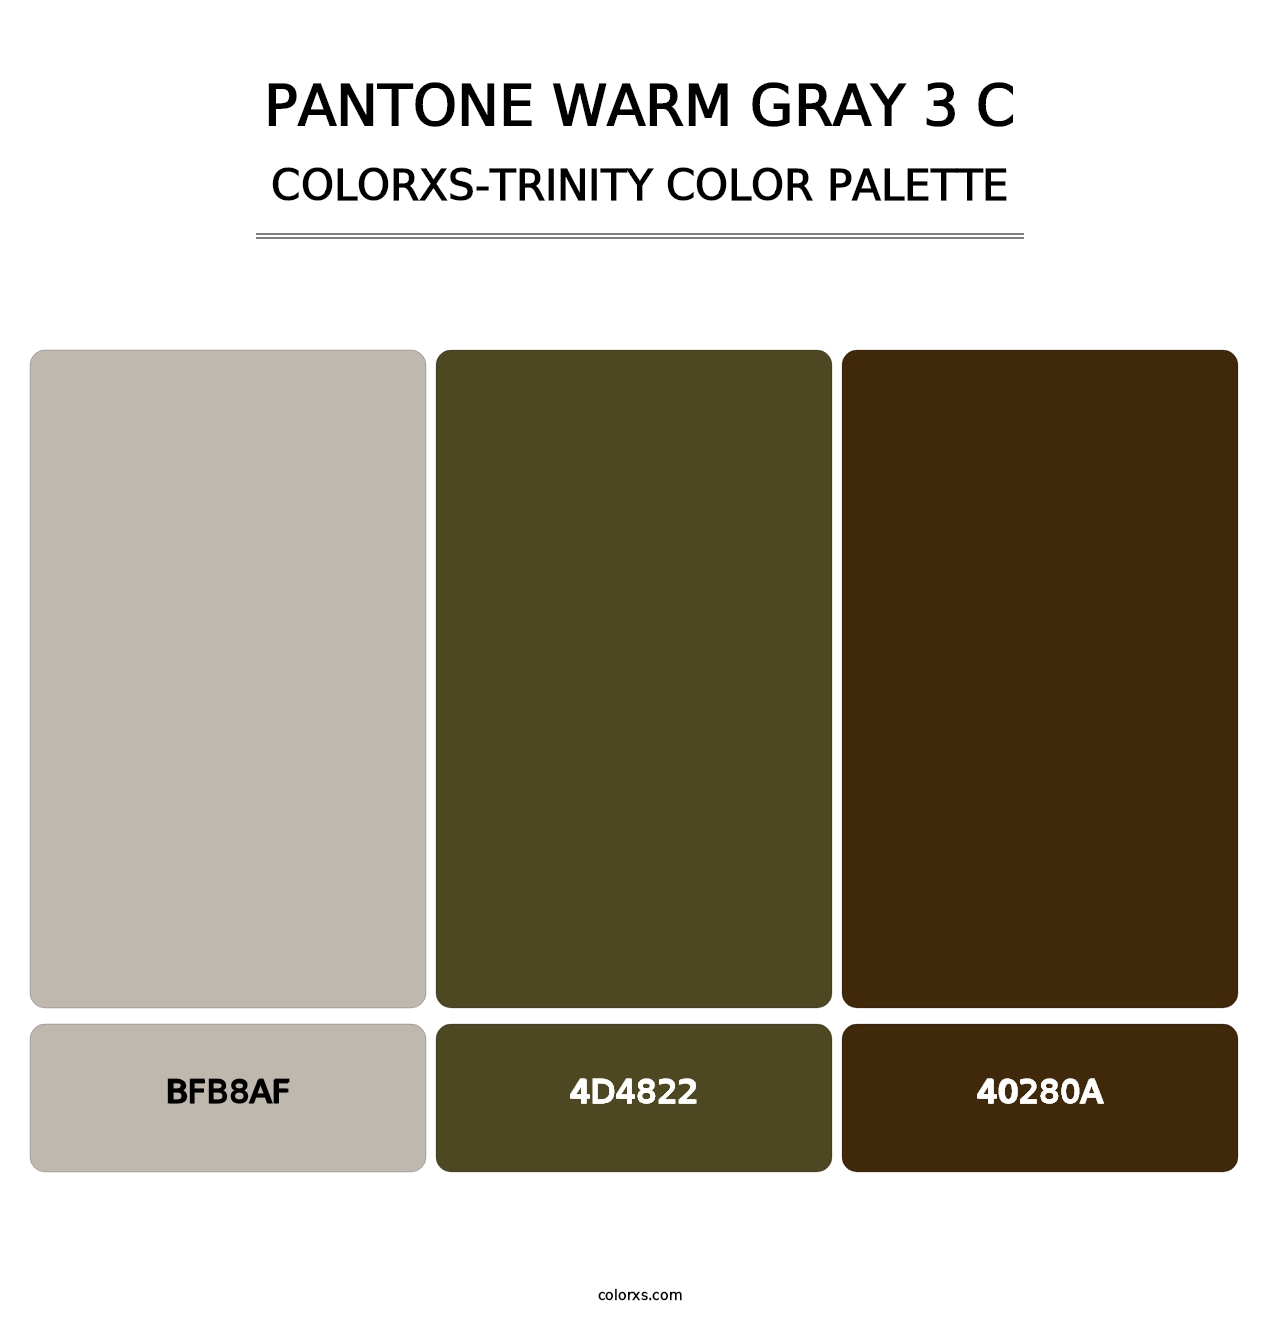 PANTONE Warm Gray 3 C - Colorxs Trinity Palette